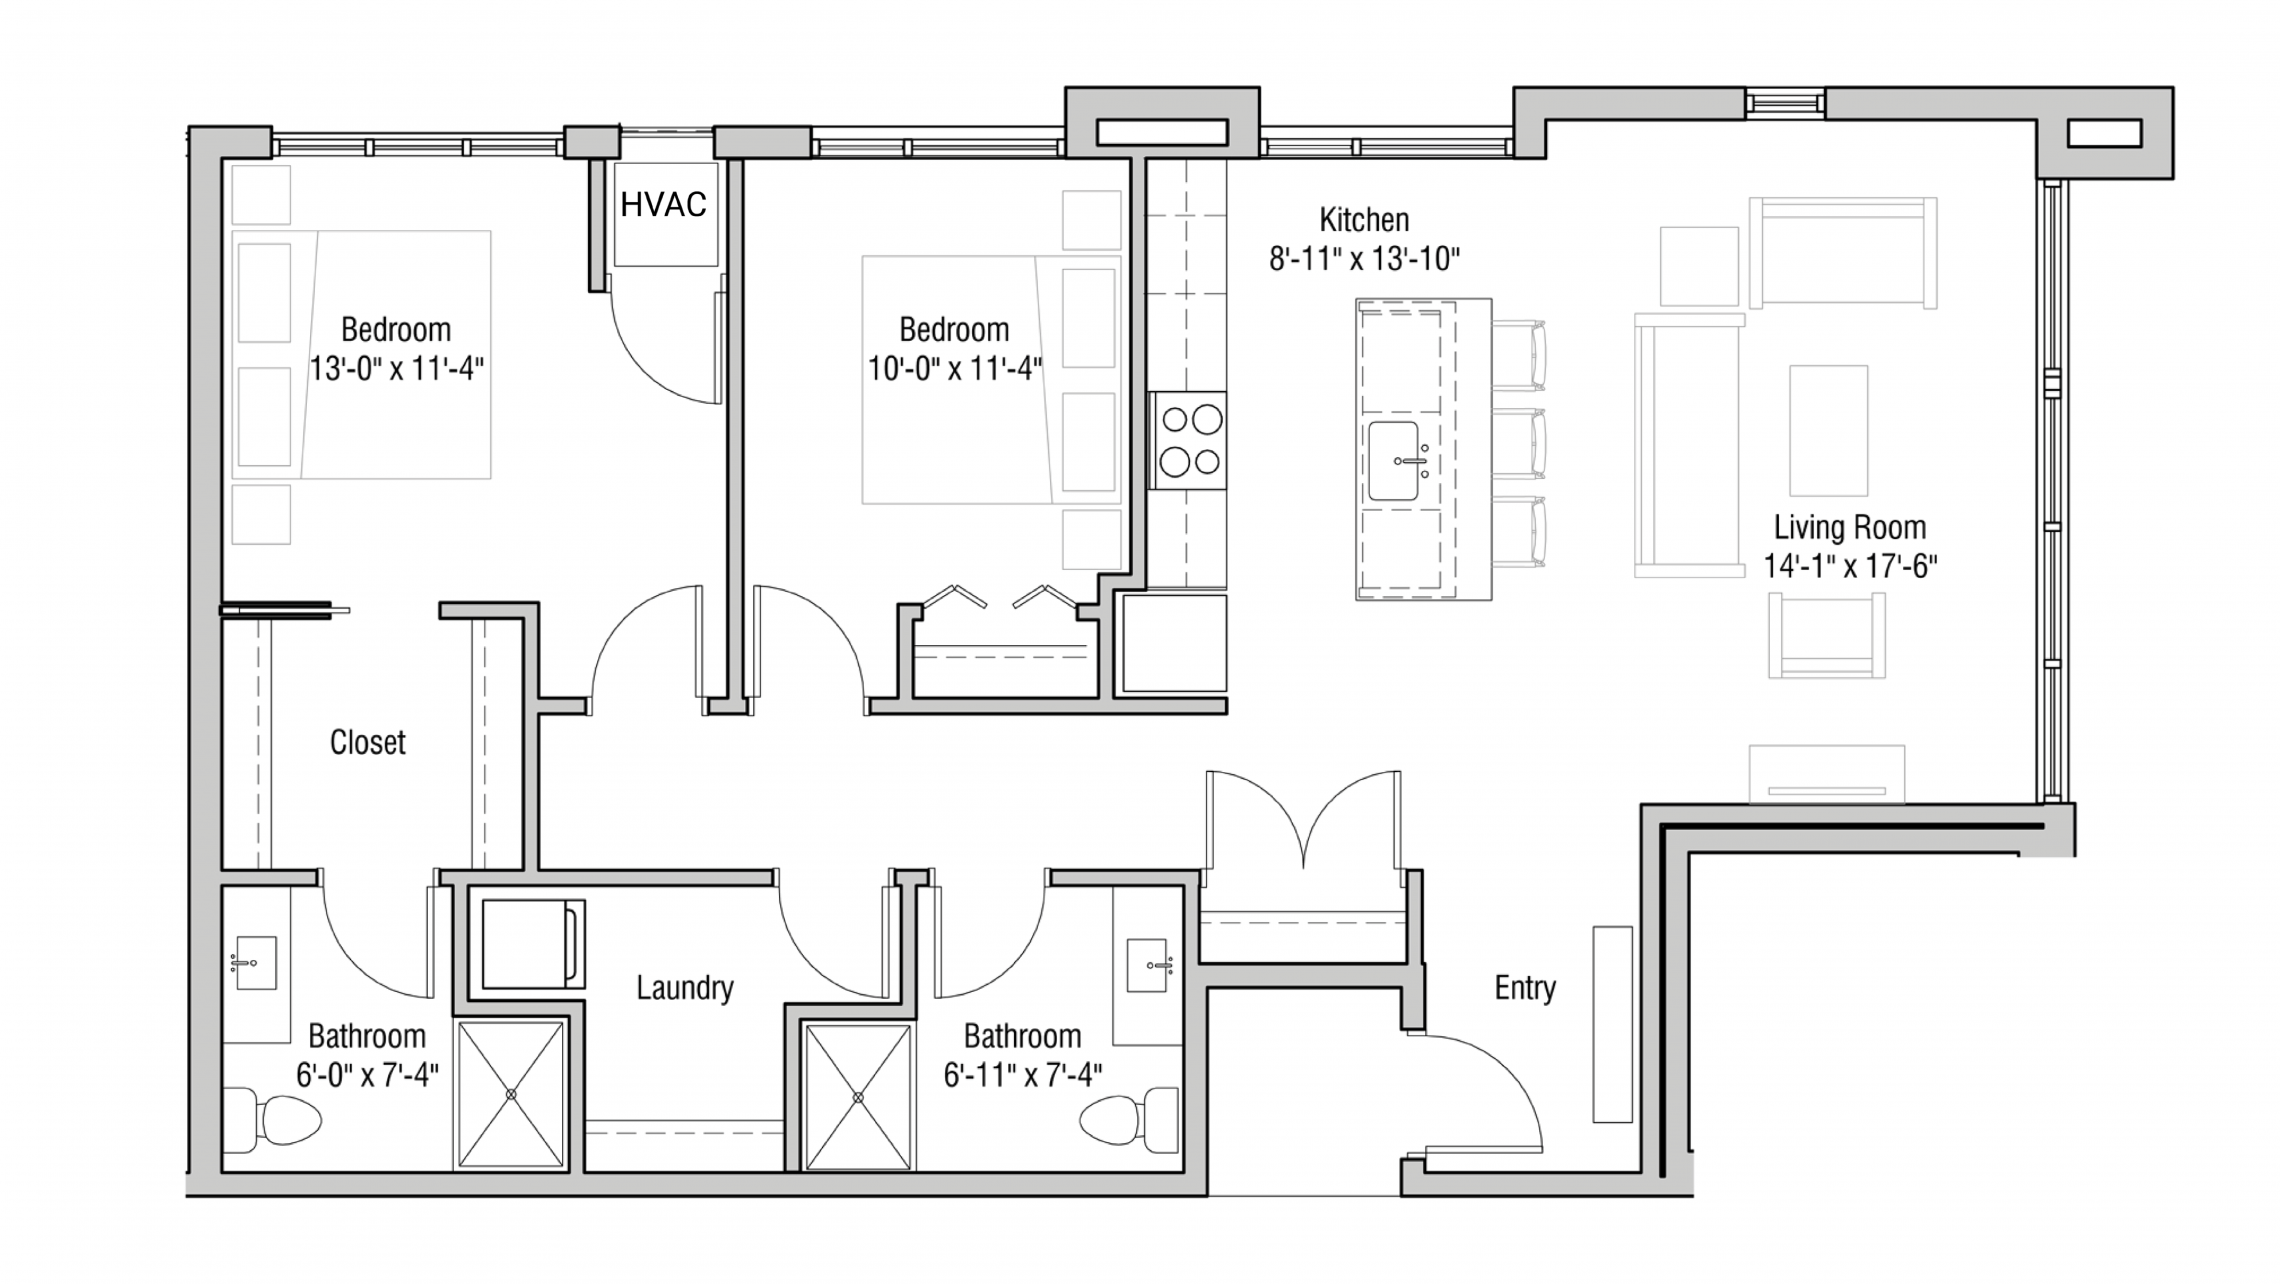 ULI Quarter Row 215 - Two Bedroom, Two Bathroom